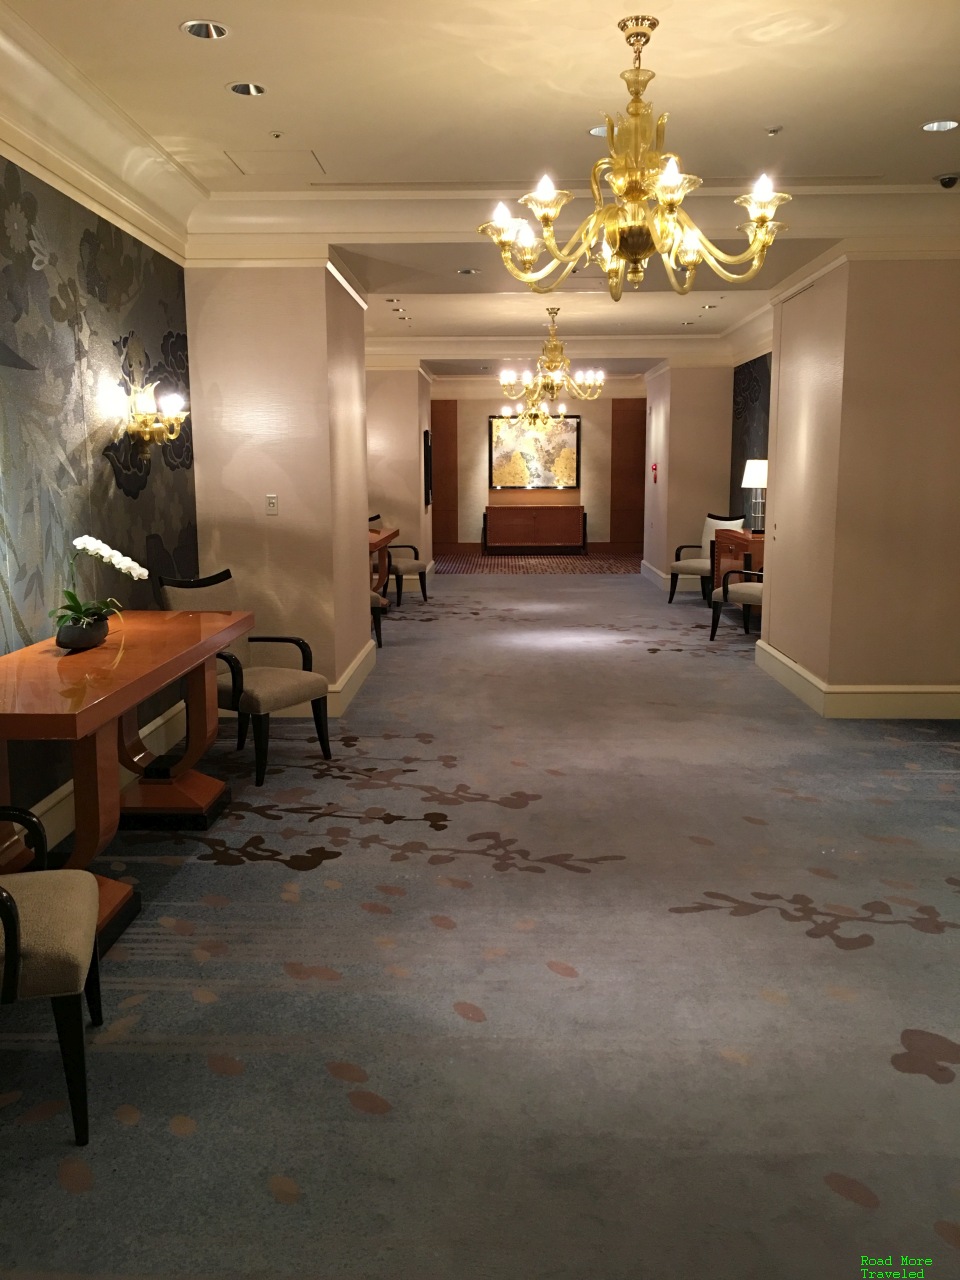 Ritz-Carlton Tokyo meeting room common areas